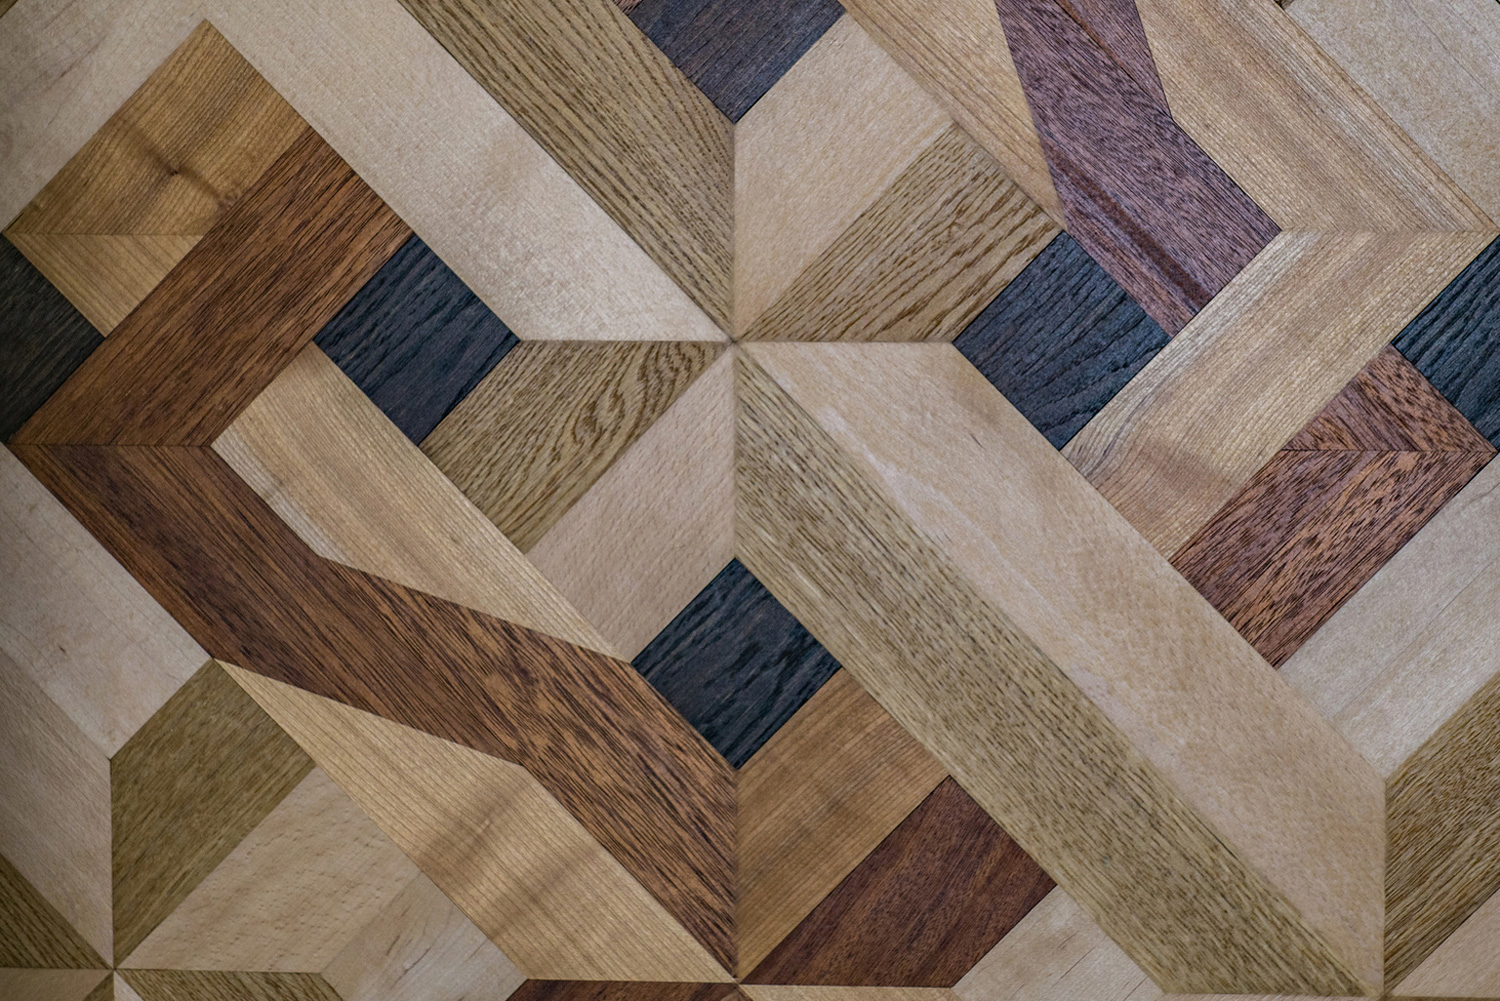 Intarsie parquet as parquet floor, design from several wood species, oak, maple, cherry tree, beech, ash